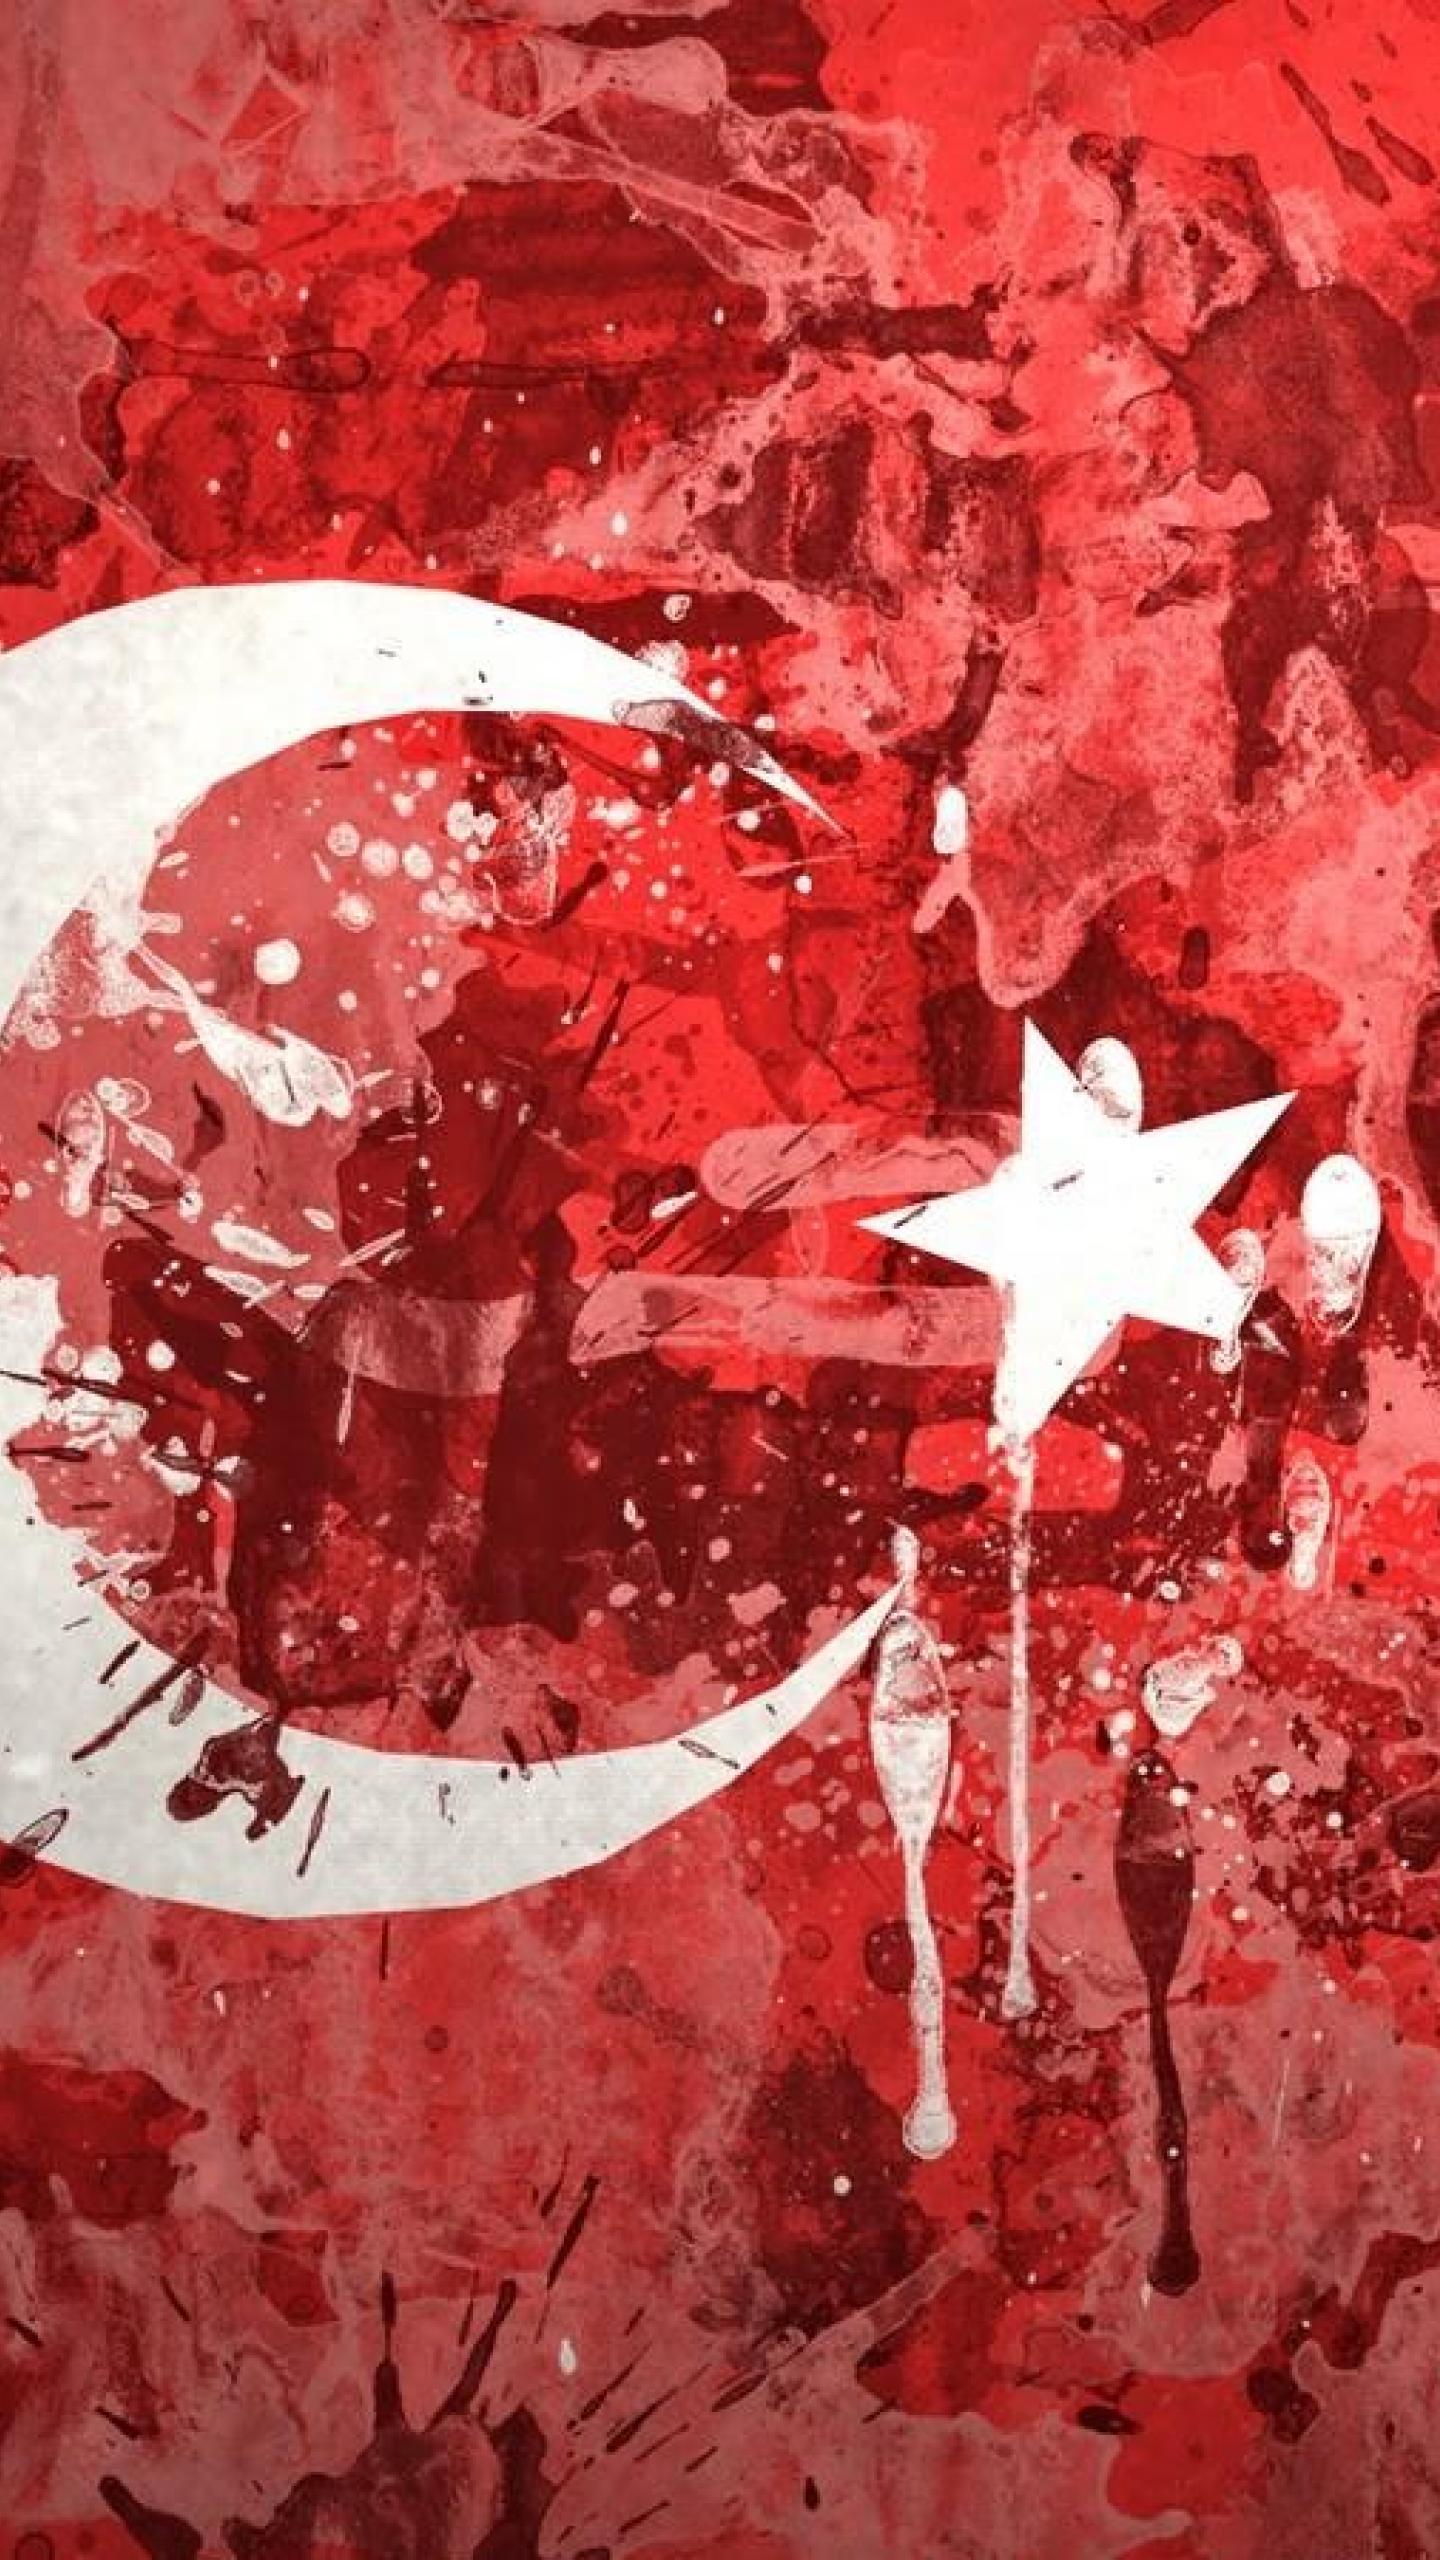 Turkish Flag Wallpaper Free Turkish Flag Background